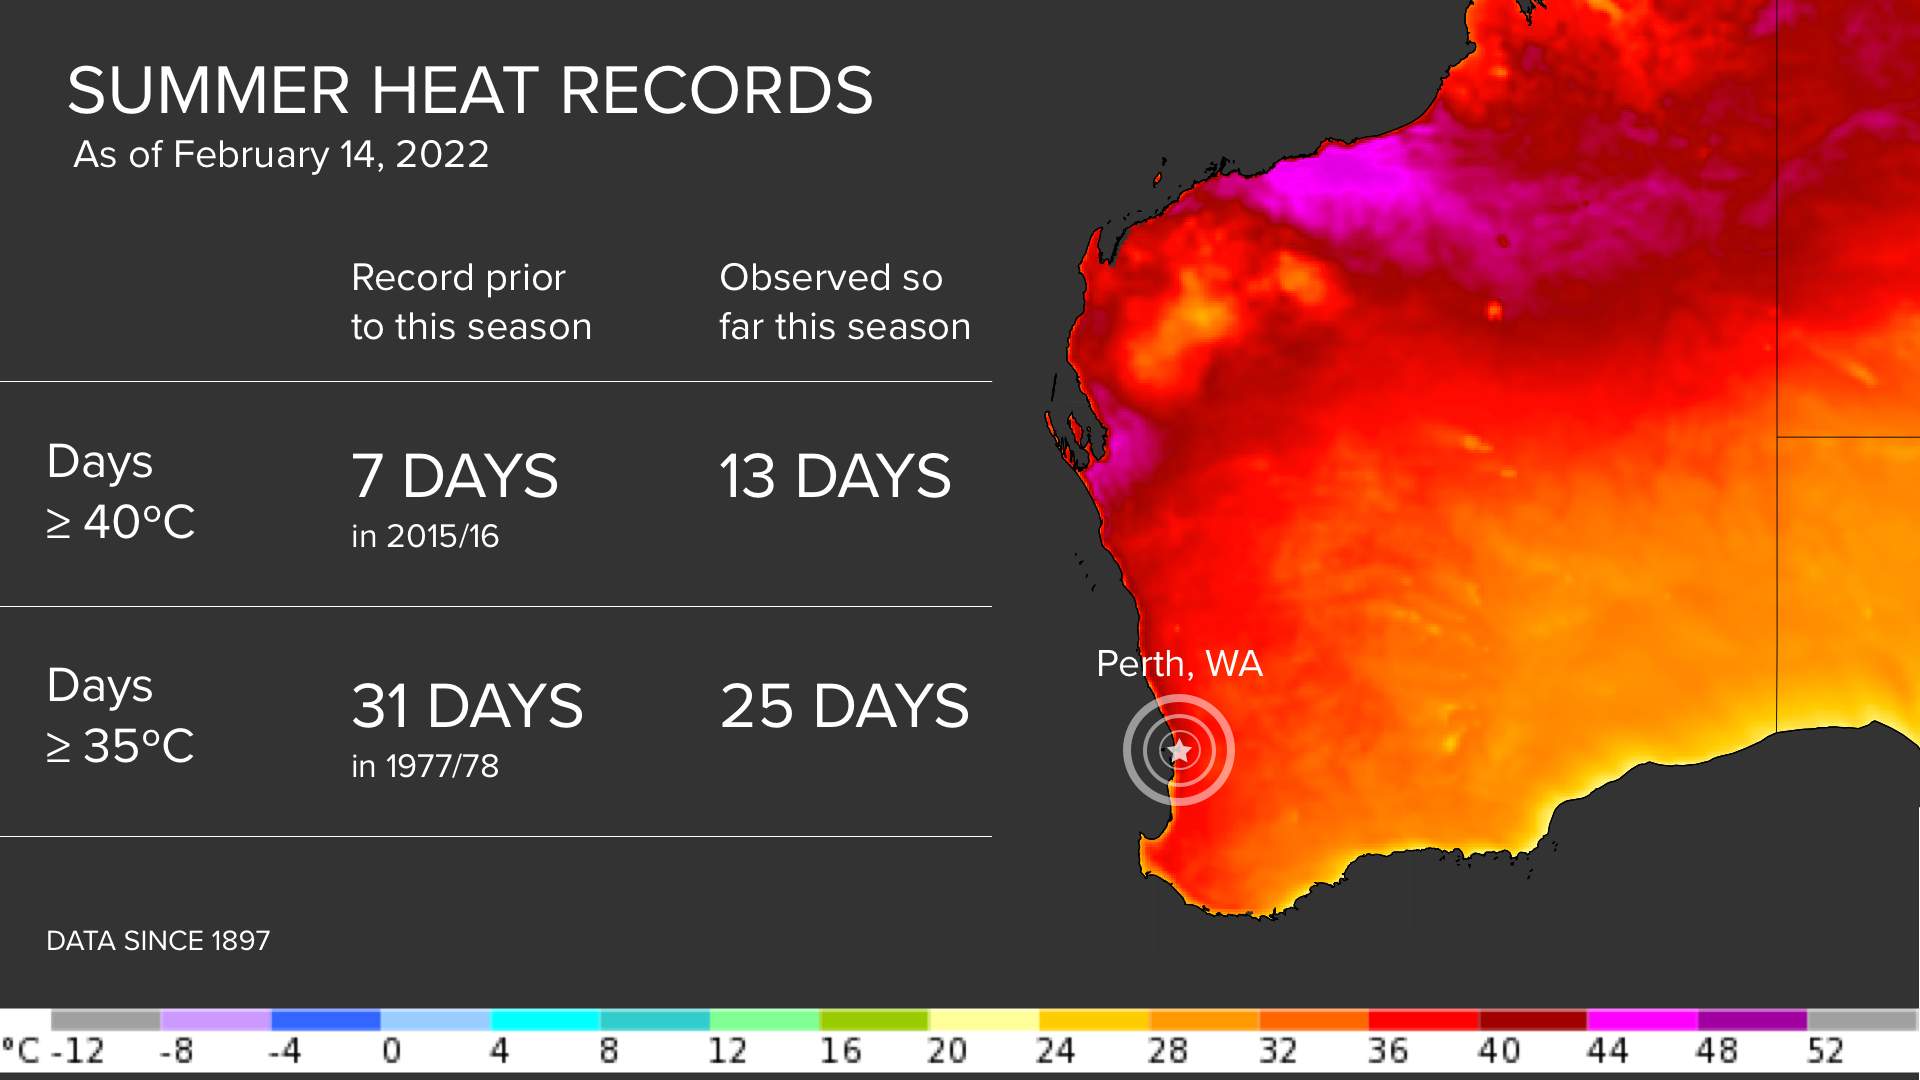 More recordbreaking heat in Perth